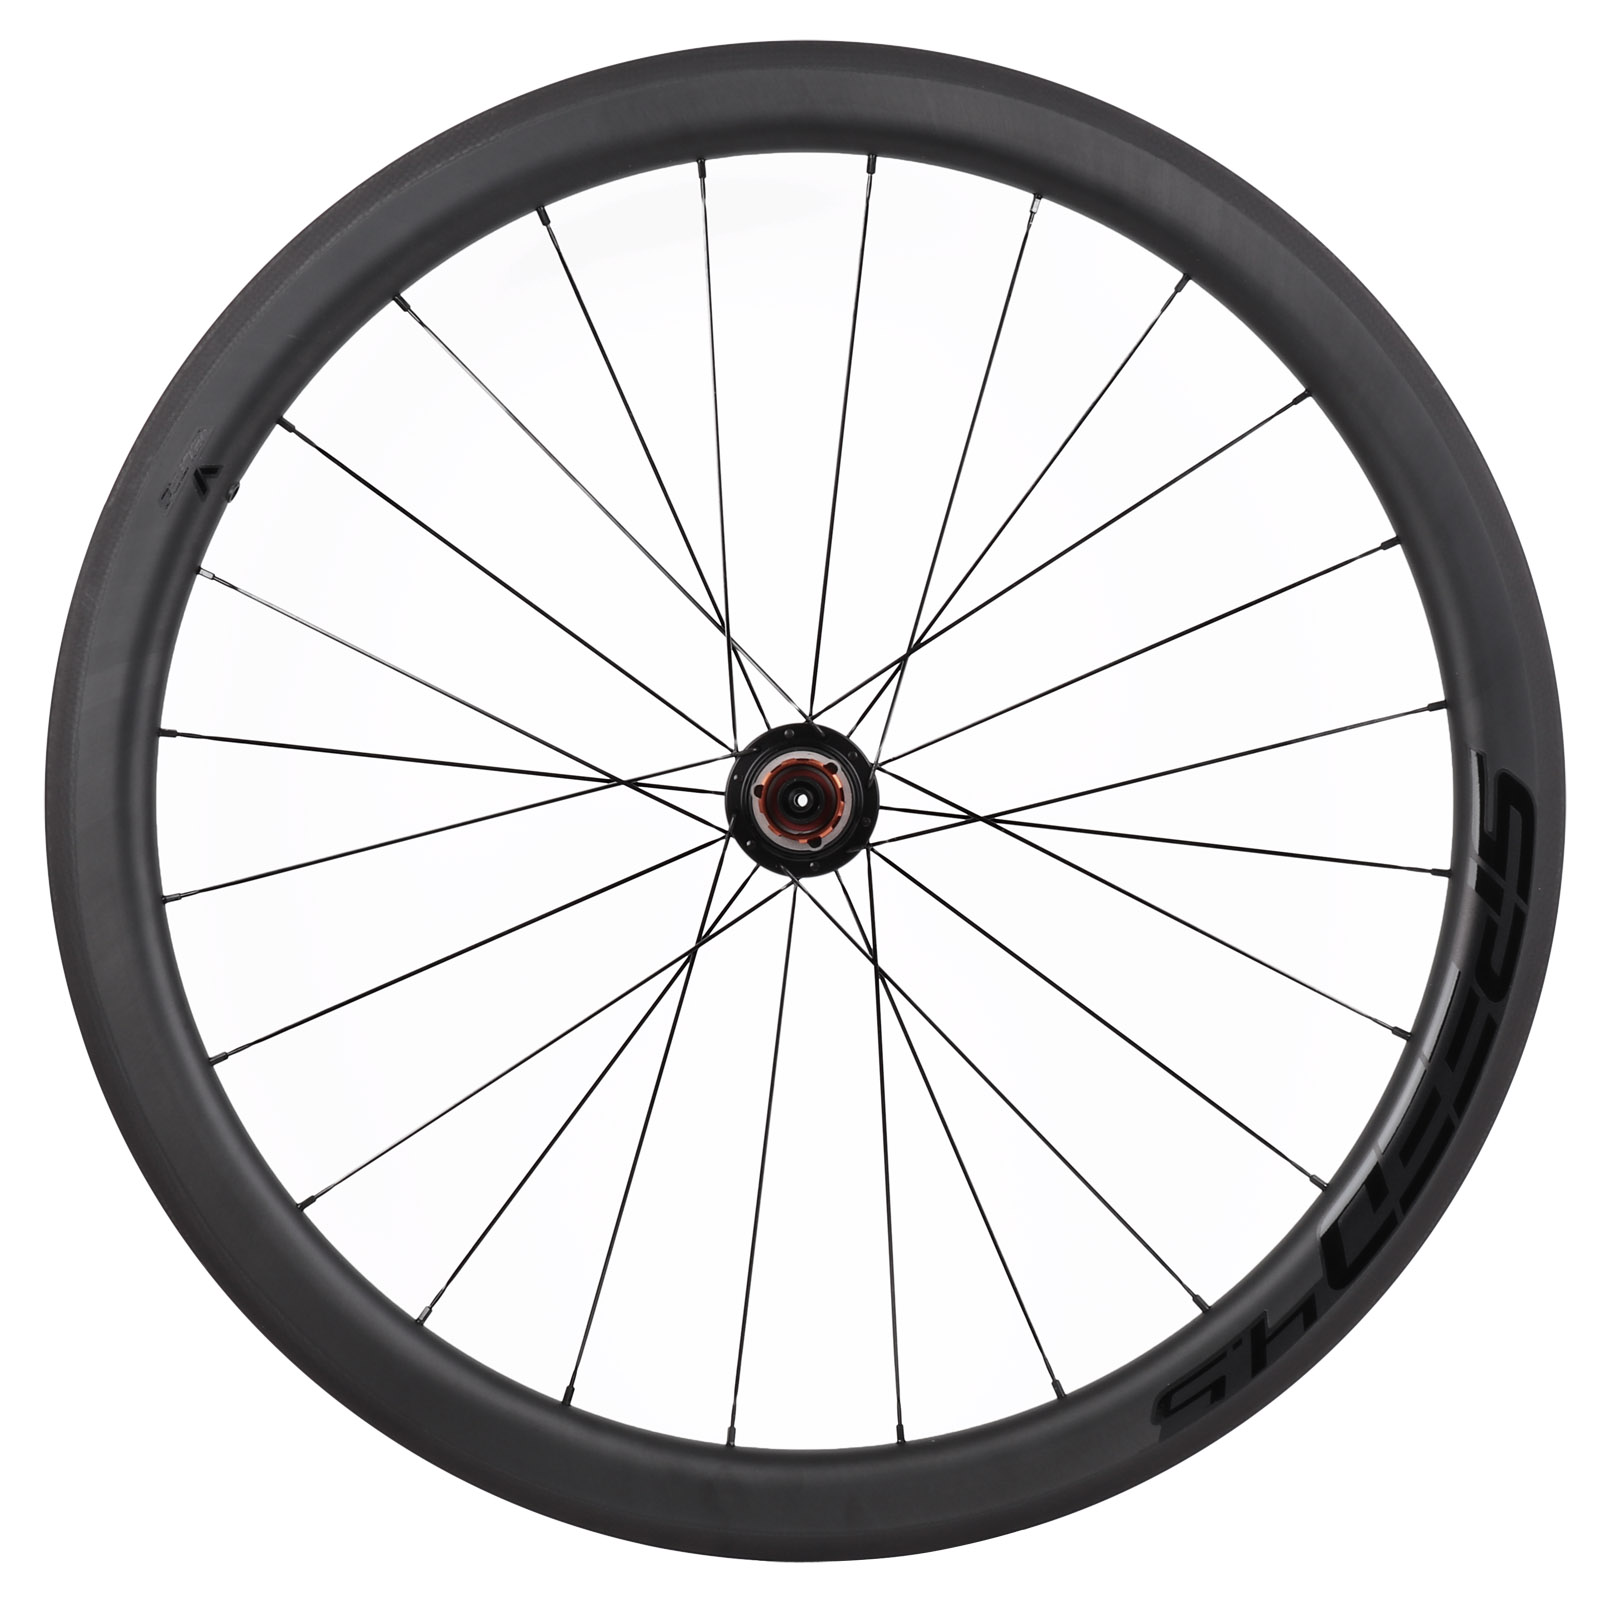 Productfoto van Veltec Speed 4.5 Carbon Rear Wheel - Clincher - QR130 - black with black decals